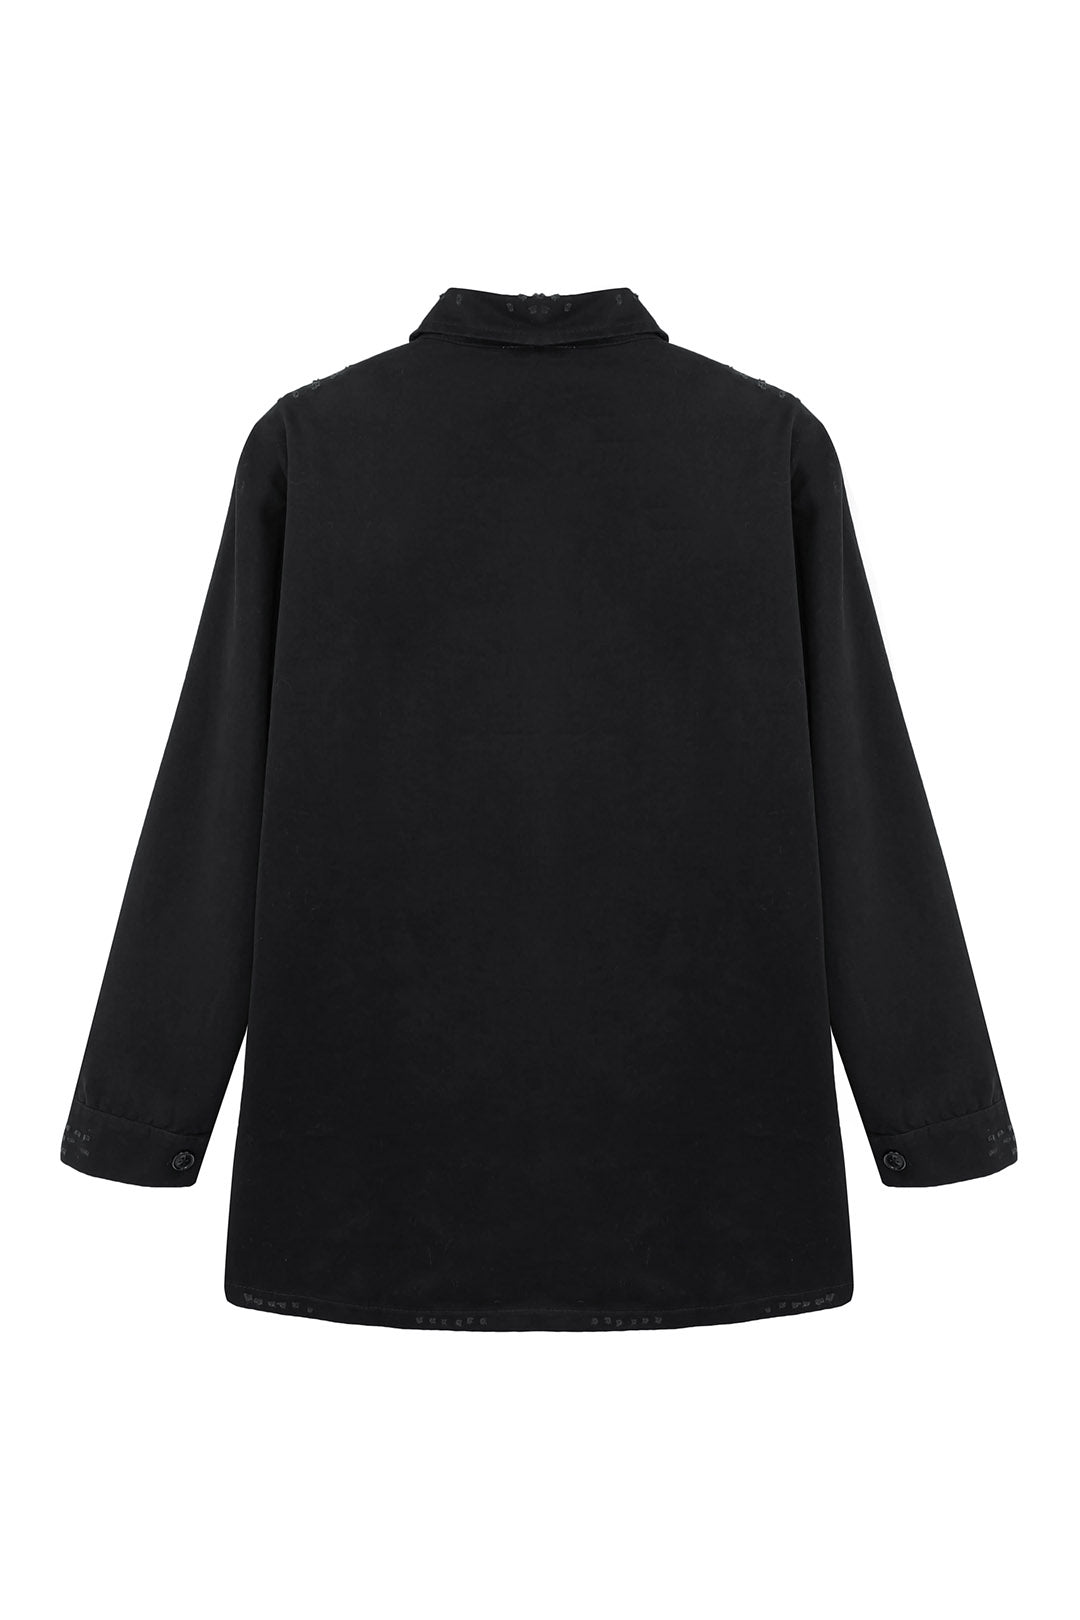 NEW FEELING Womens Black Plus Size Coats & Jackets